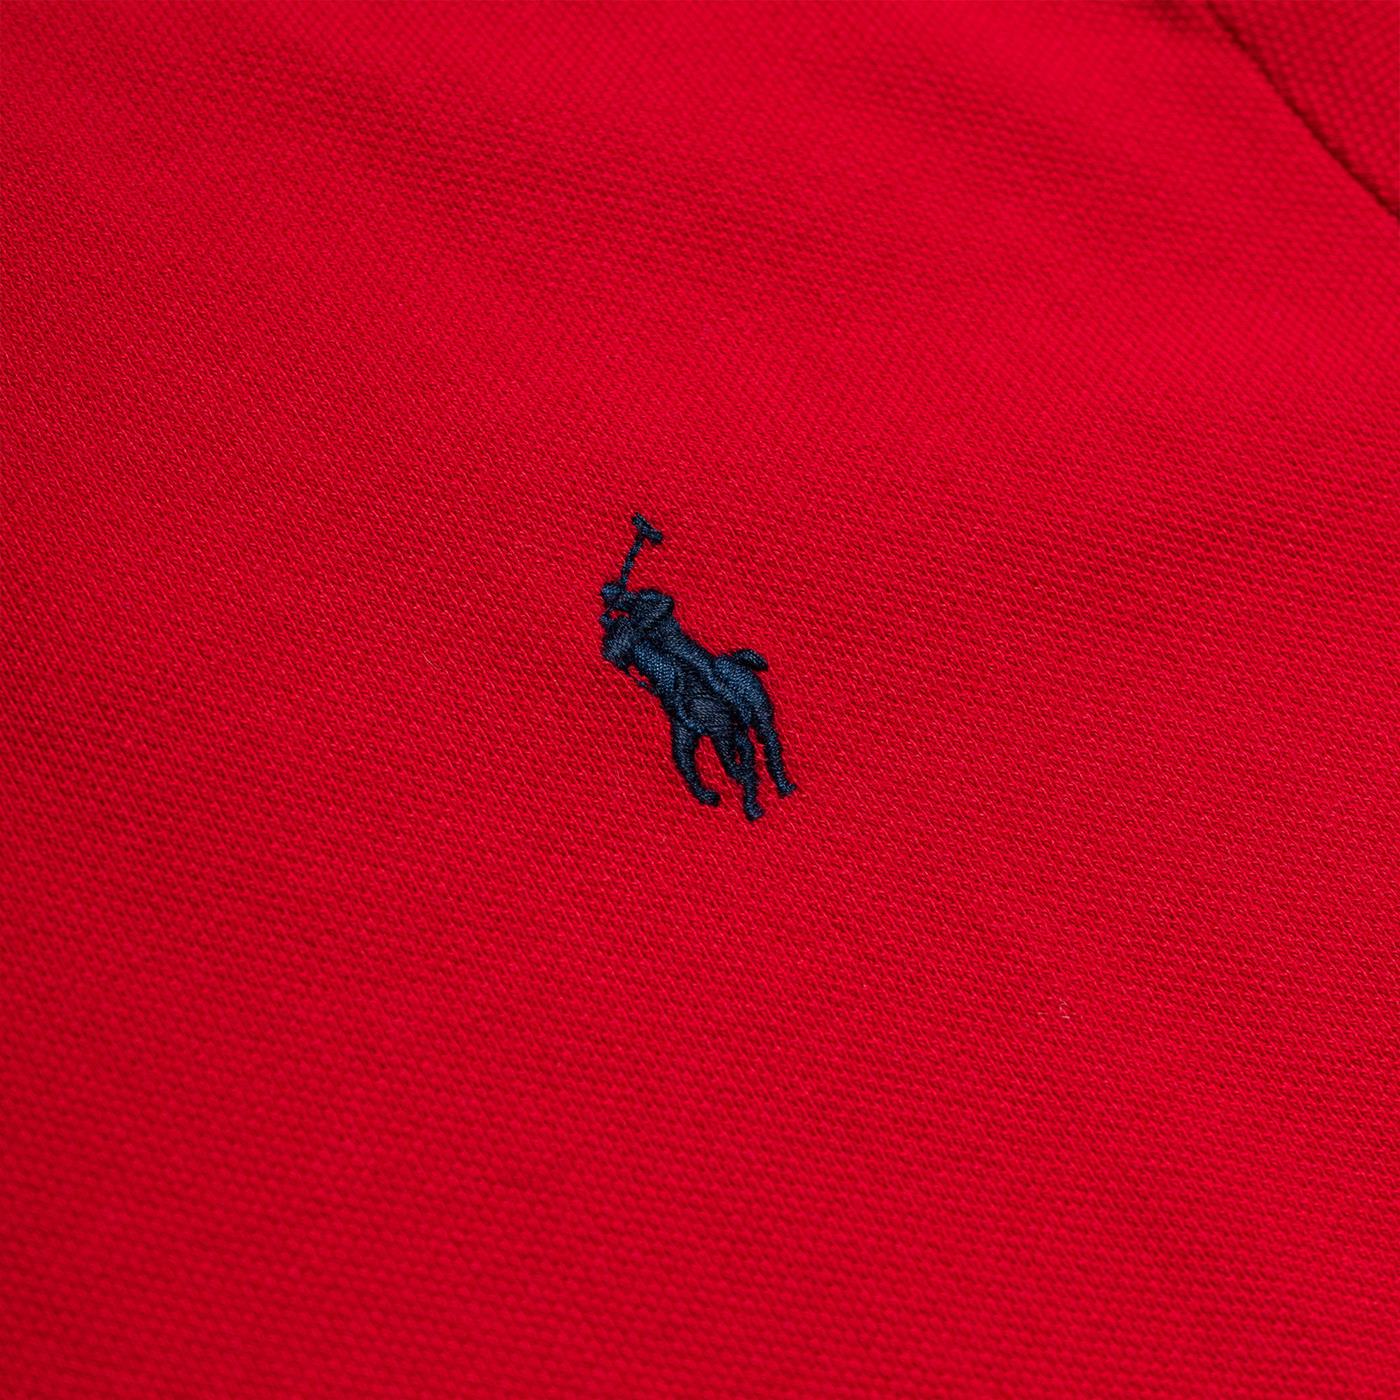 Polo Shirt POLO RALPH LAUREN Slim Fit Mesh Polo Shirt Red for Man ...